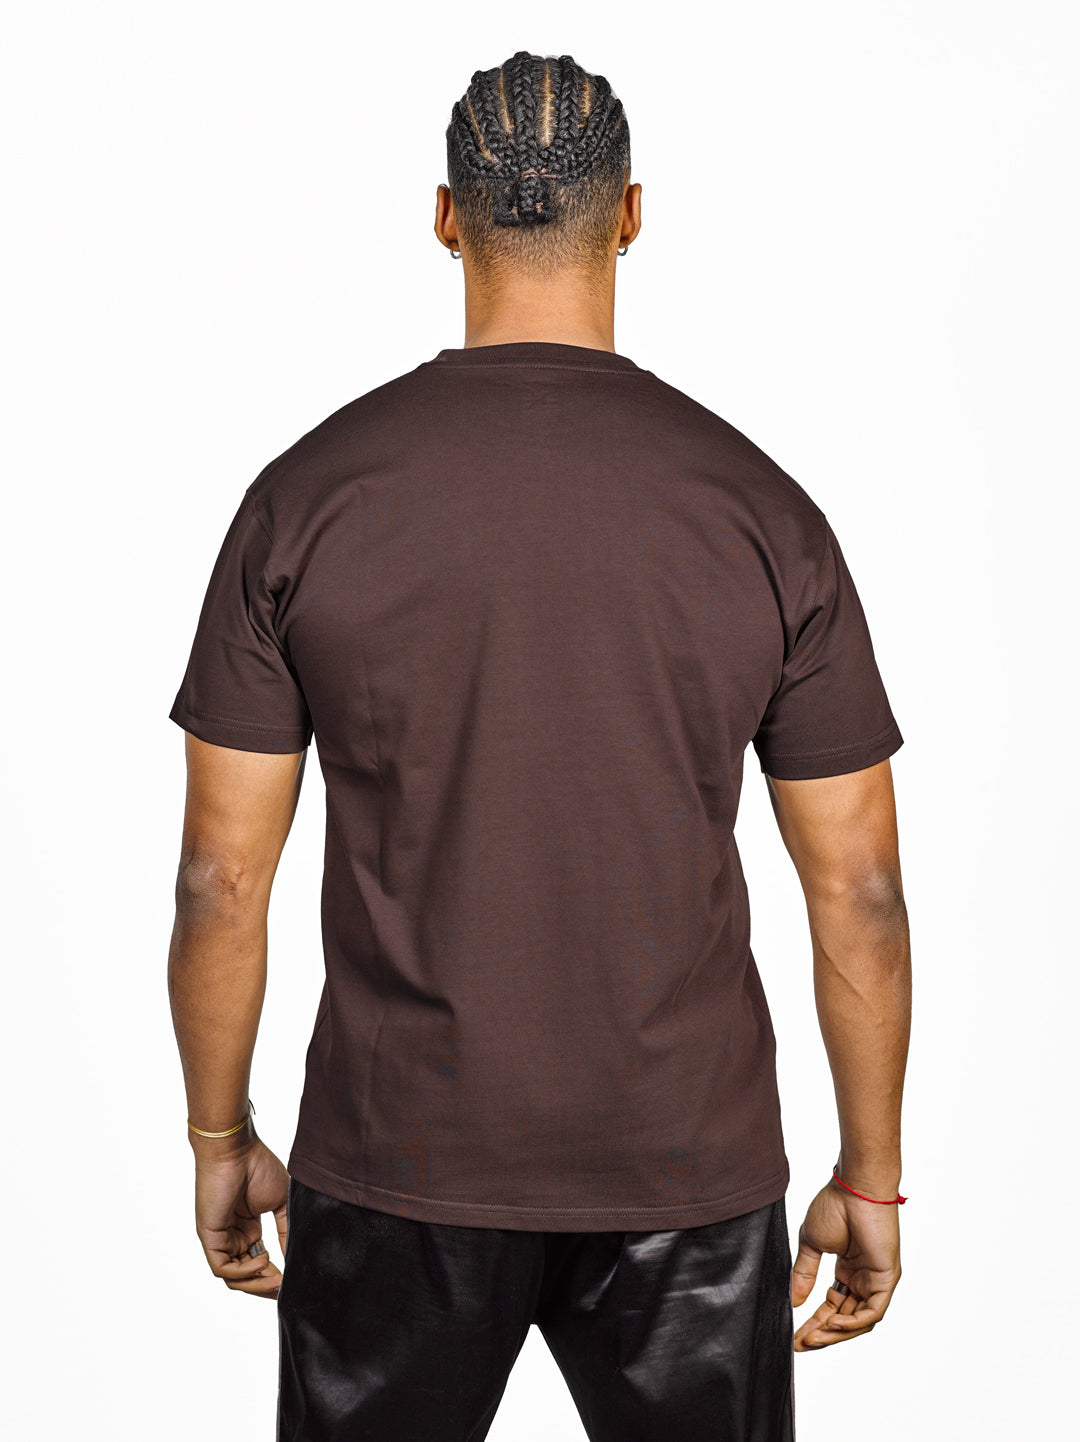 Exetees Plain Regular Round Neck T-Shirt - Brown